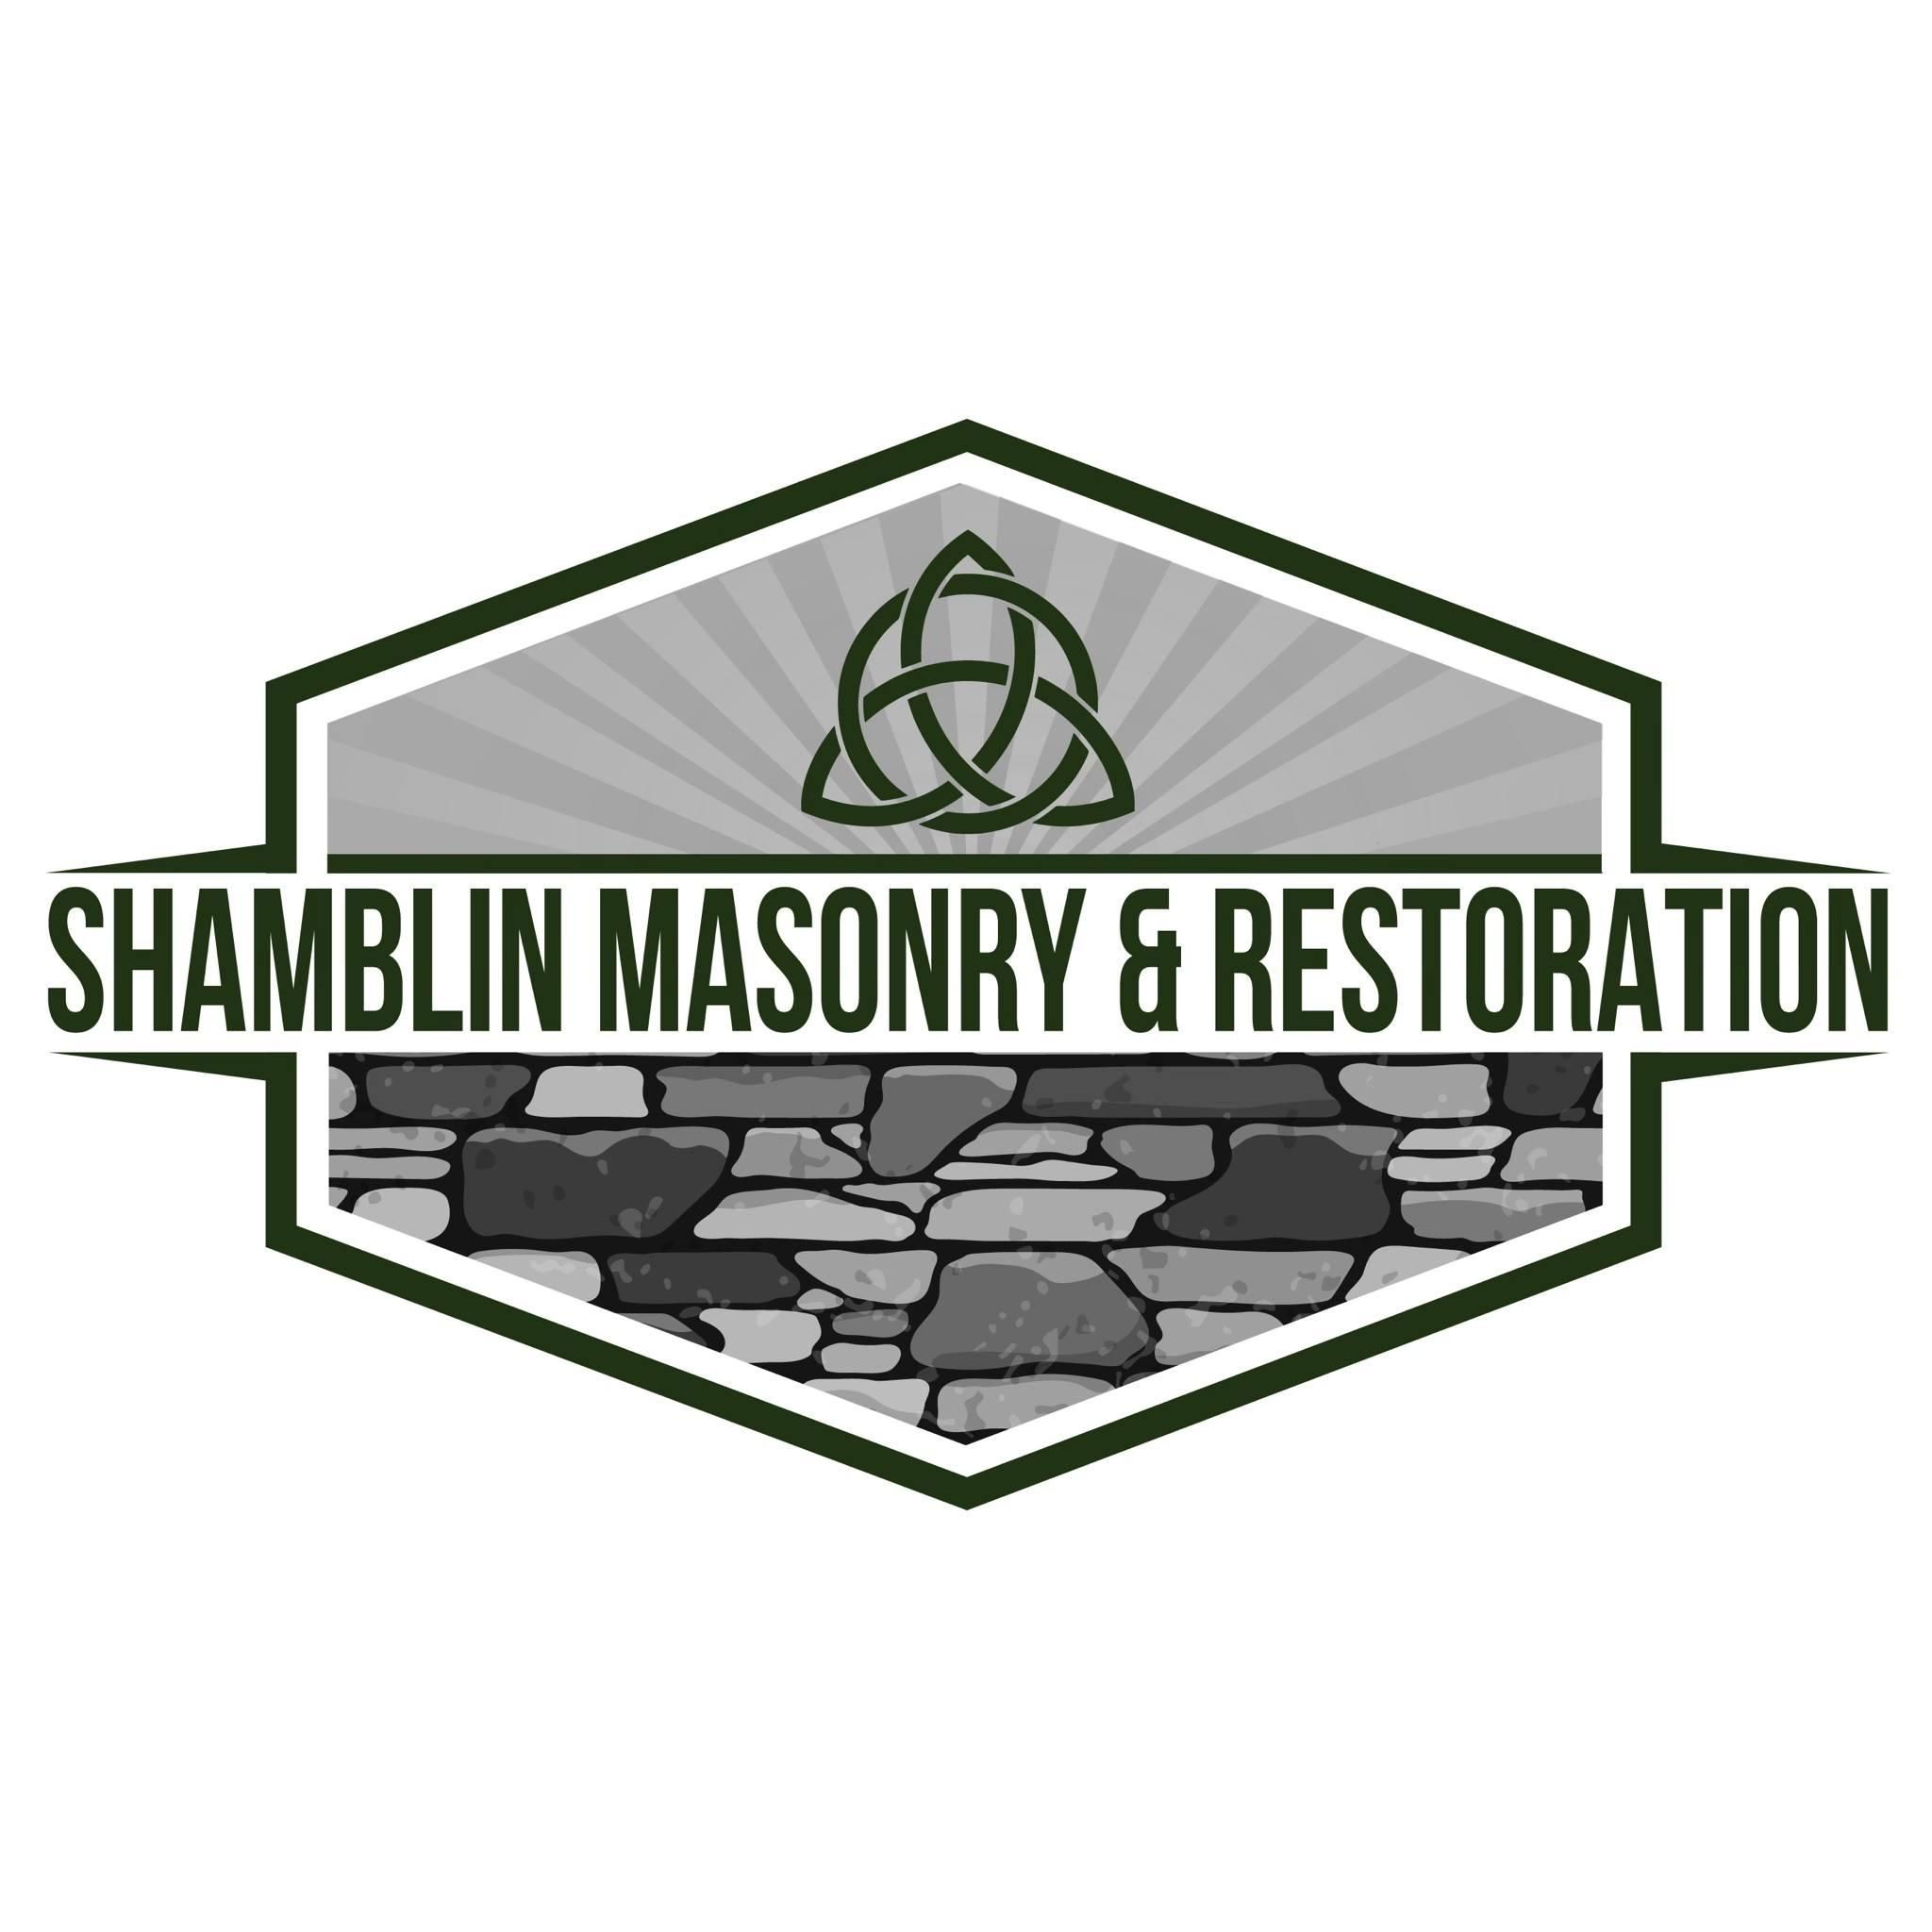  for Shamblin Masonry & Restoration in Columbus, Ohio